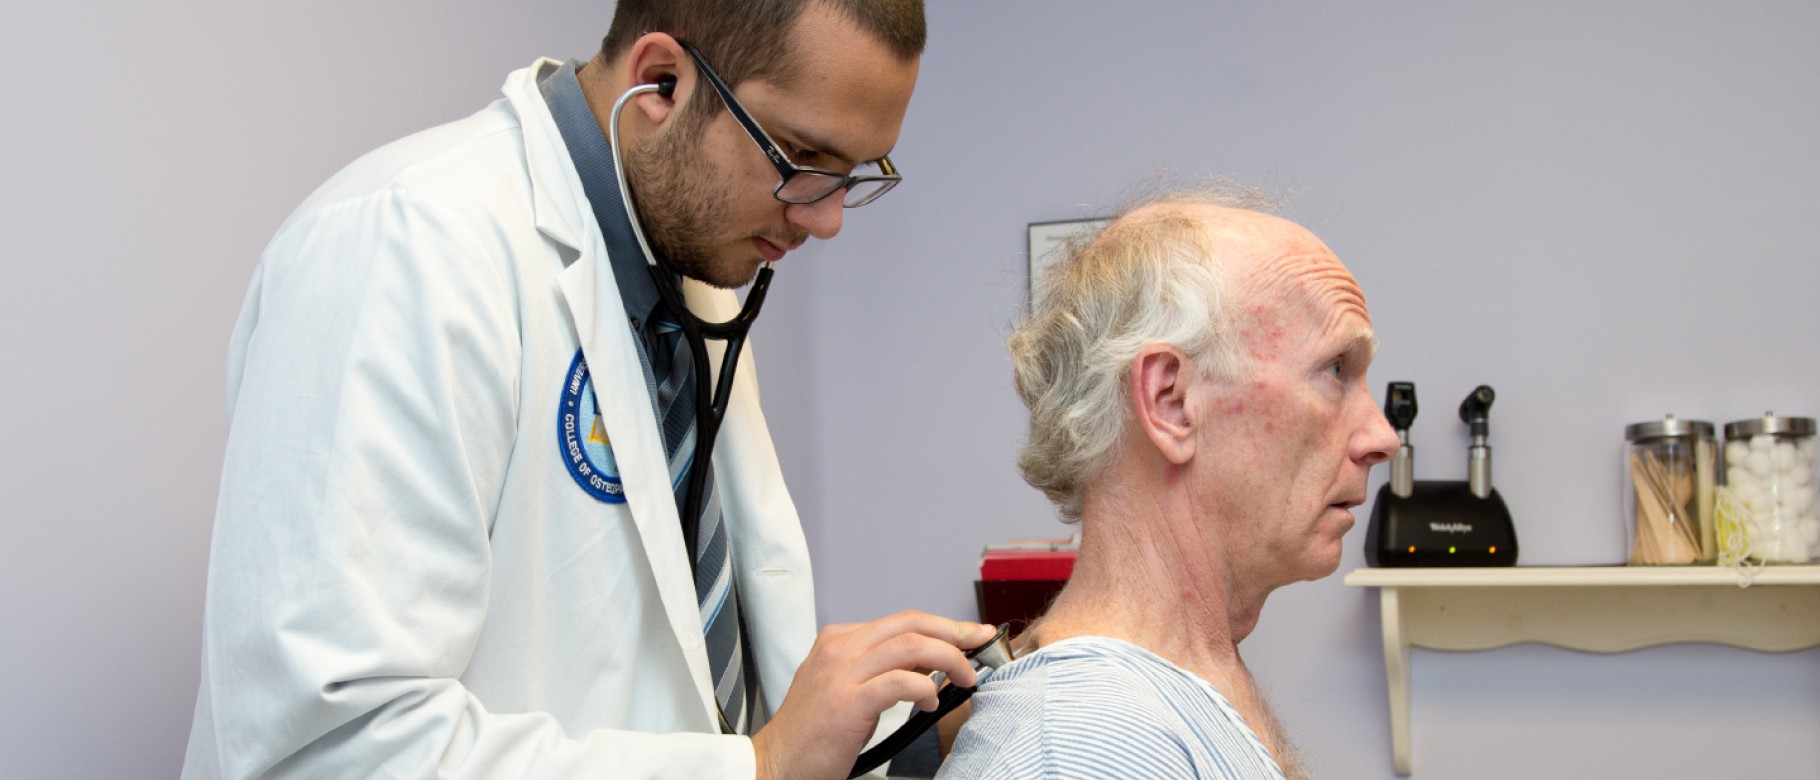 A UNE medical student treats an older patient